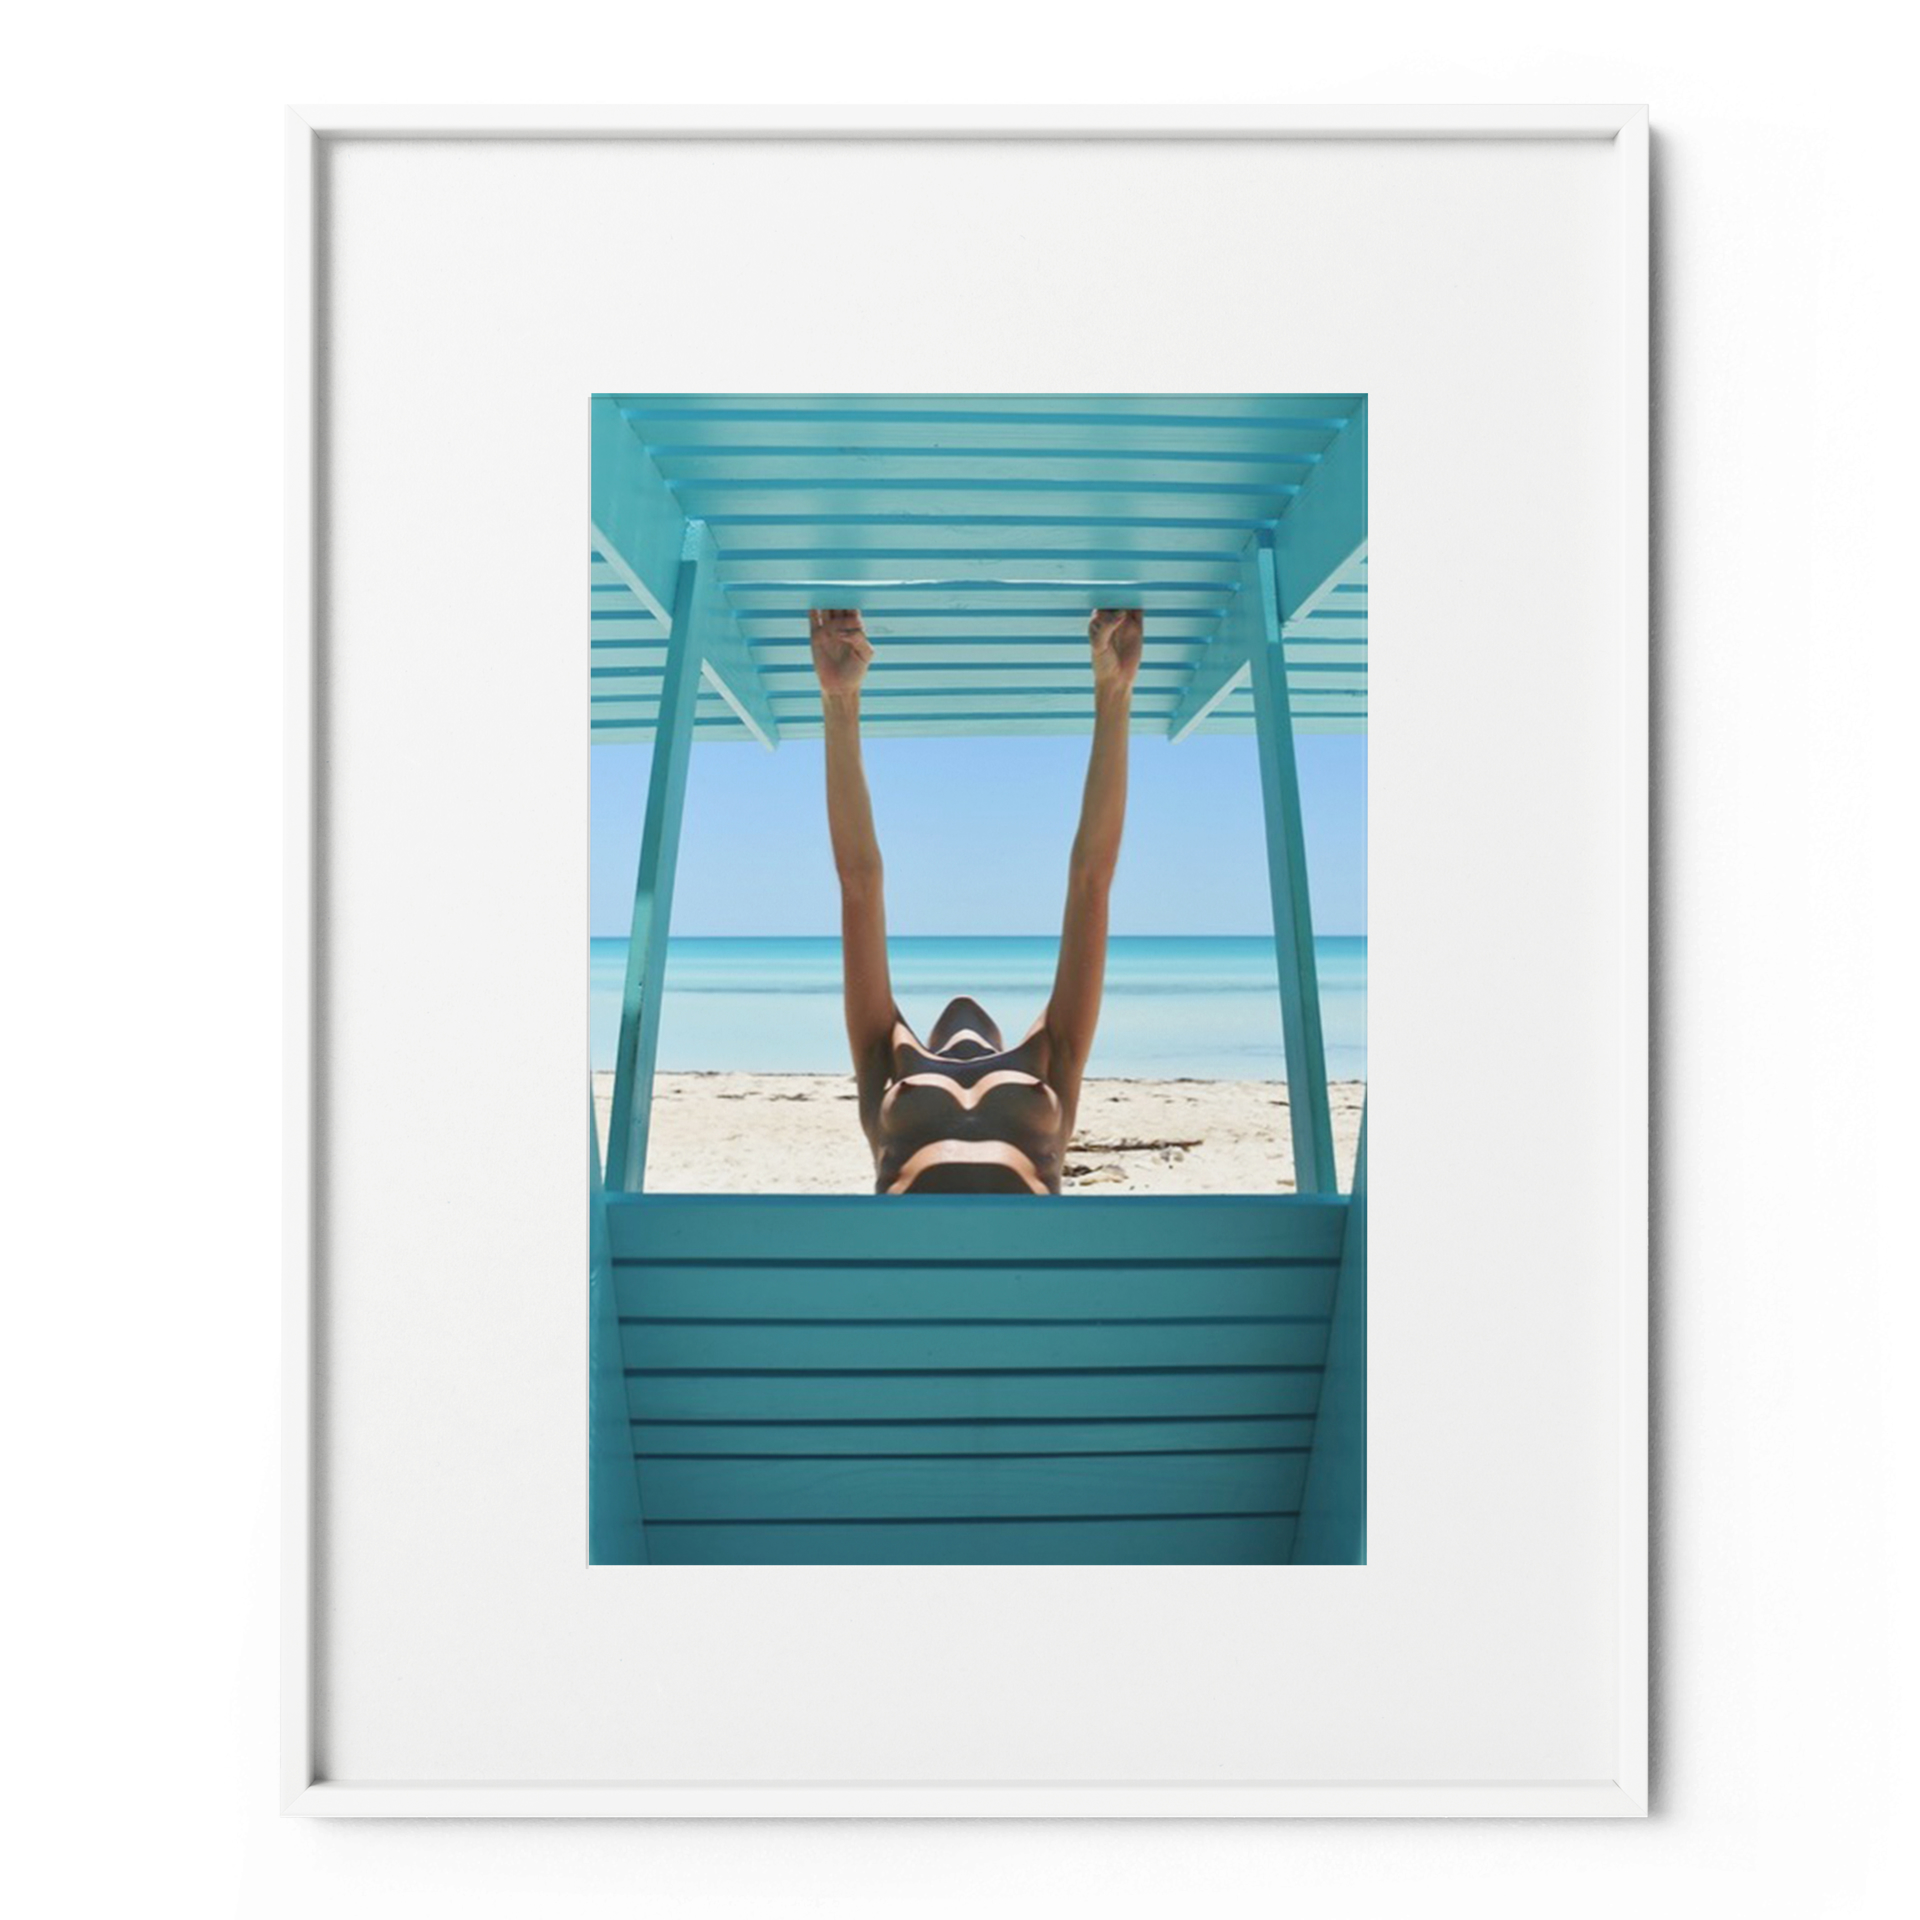 Kayley Lifeguard (Bahamas) by Jean-Philippe Piter